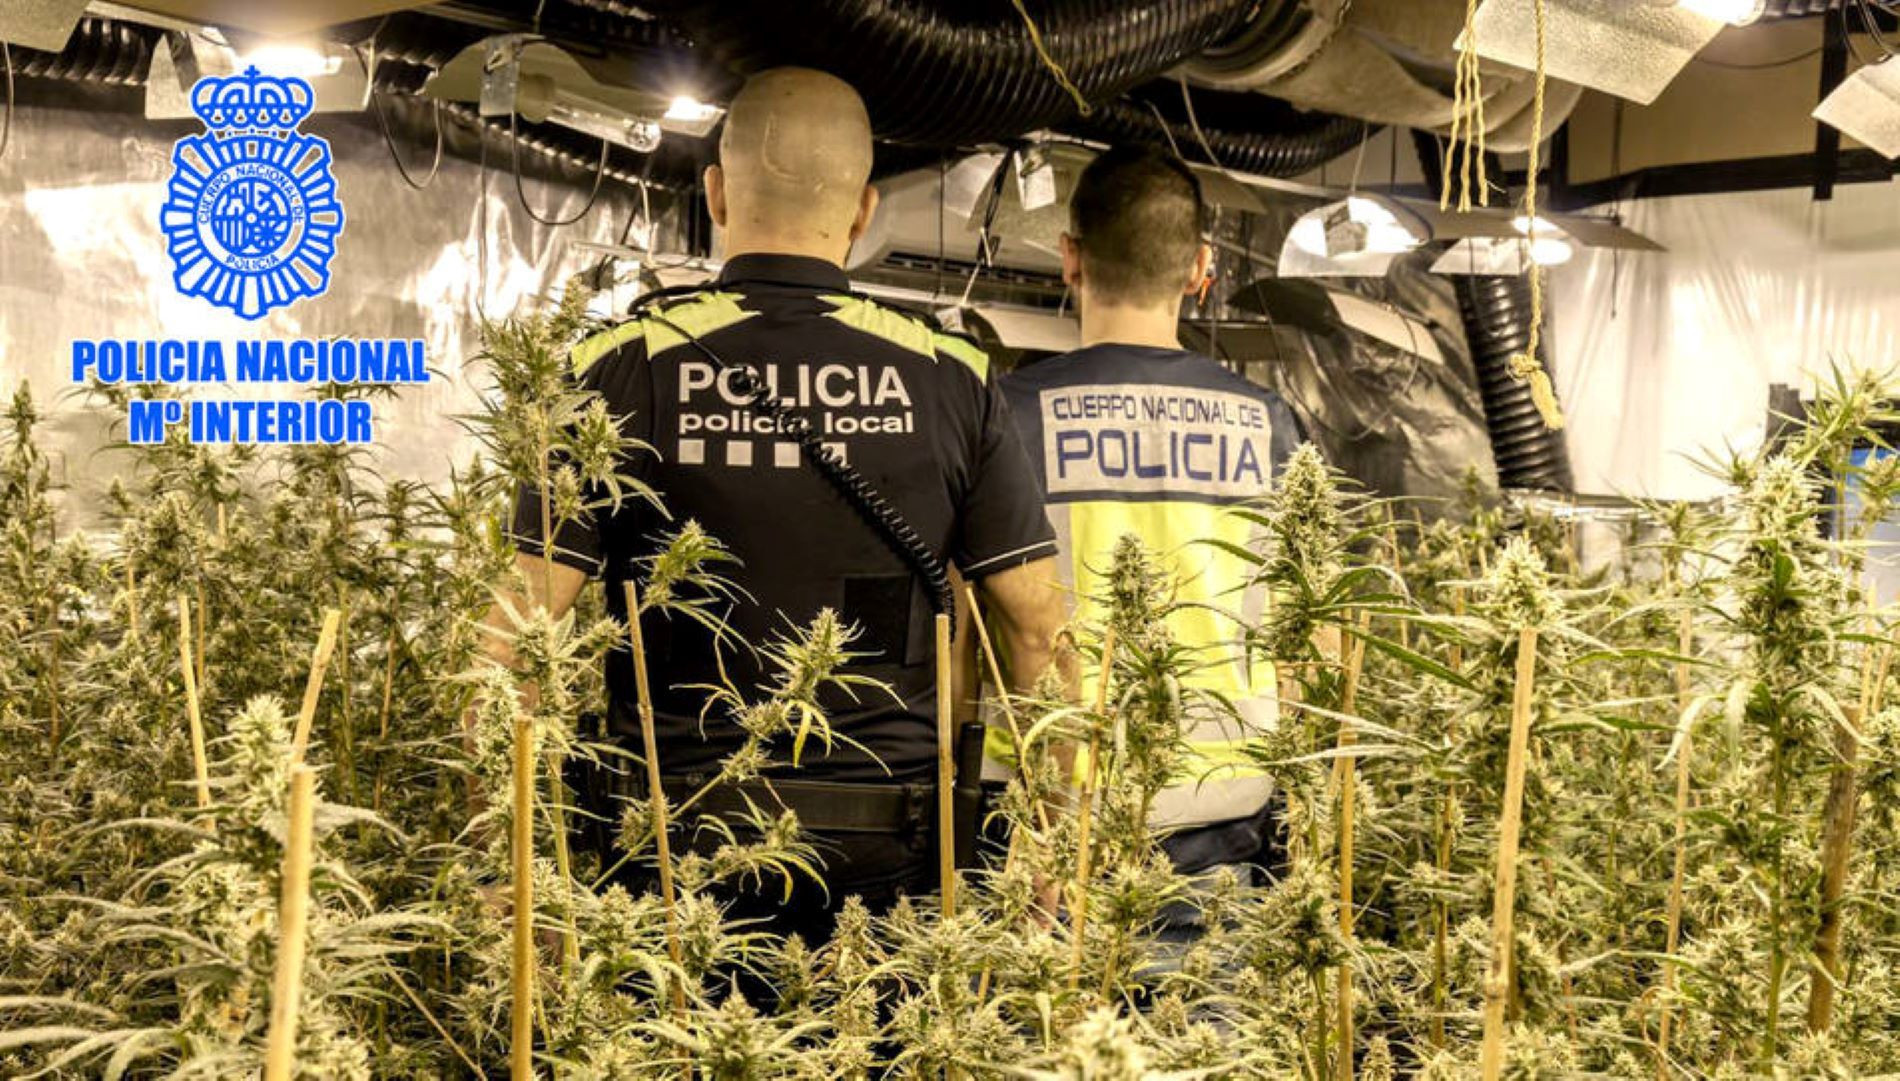 Plantación de marihuana en Cubelles / POLICÍA NACIONAL